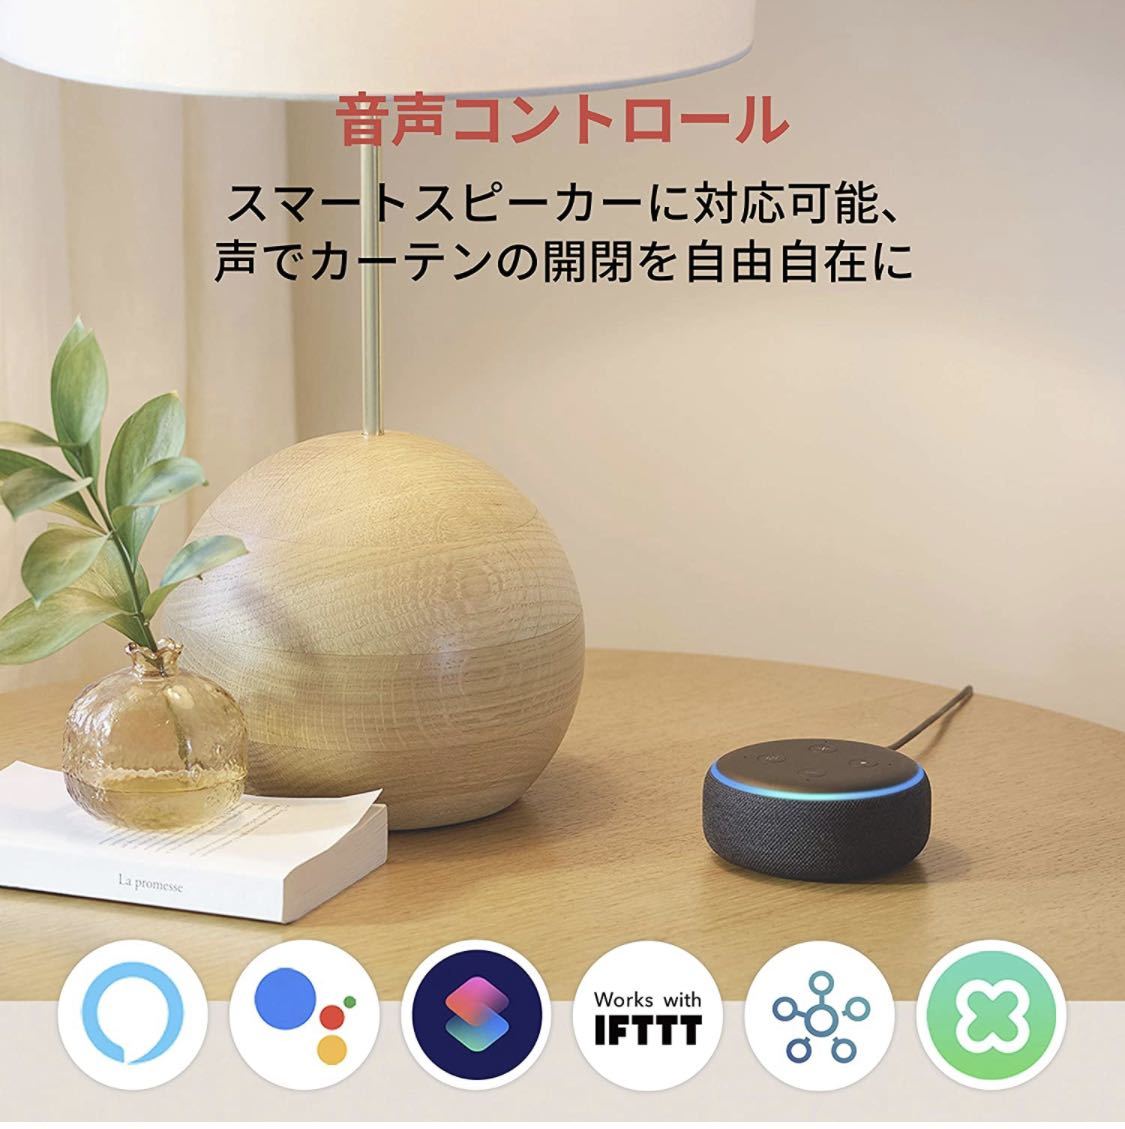 SwitchBot カーテン 自動 開閉 スイッチボット - Alexa Google Home IFTTT イフト Siri LINE Clovaに対応 スマートホーム 遠隔操作 取付